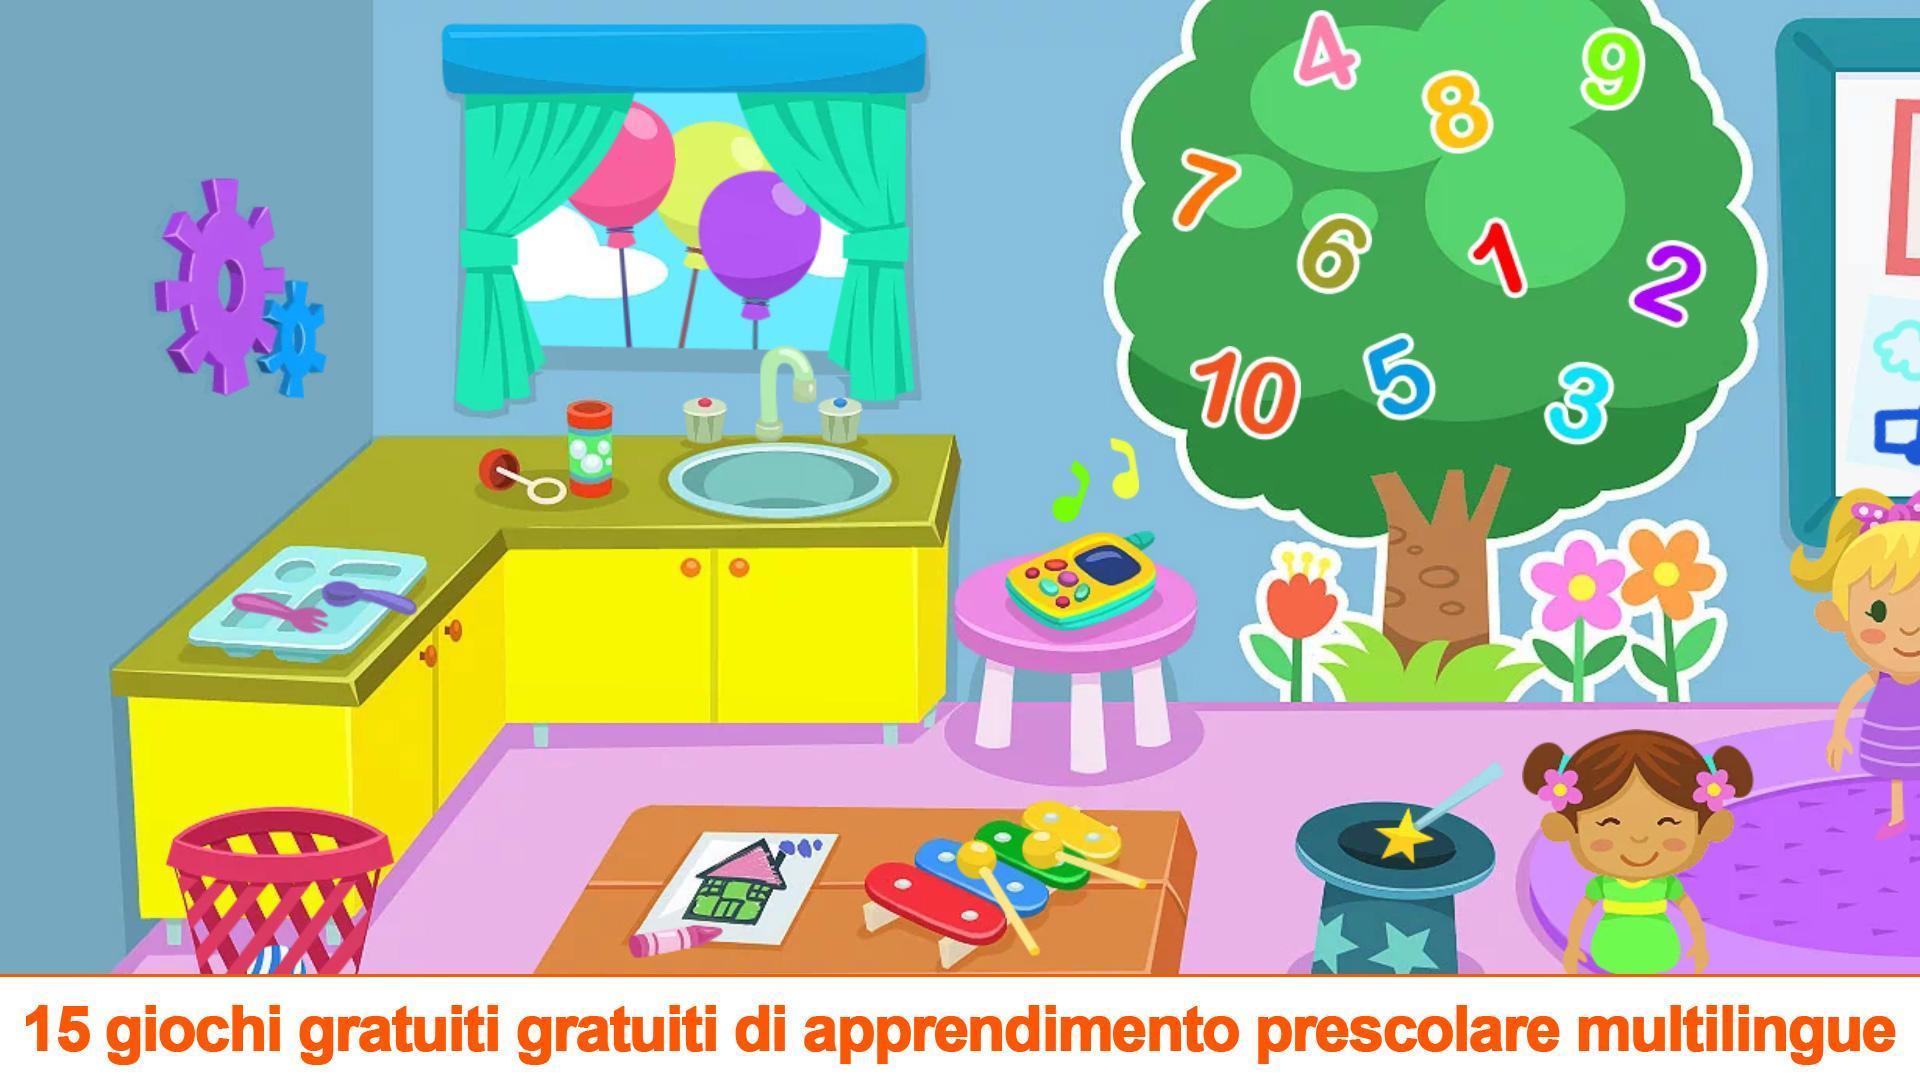 Kiddos in Kindergarten - Gioco gratis per bambini for Android - APK Download